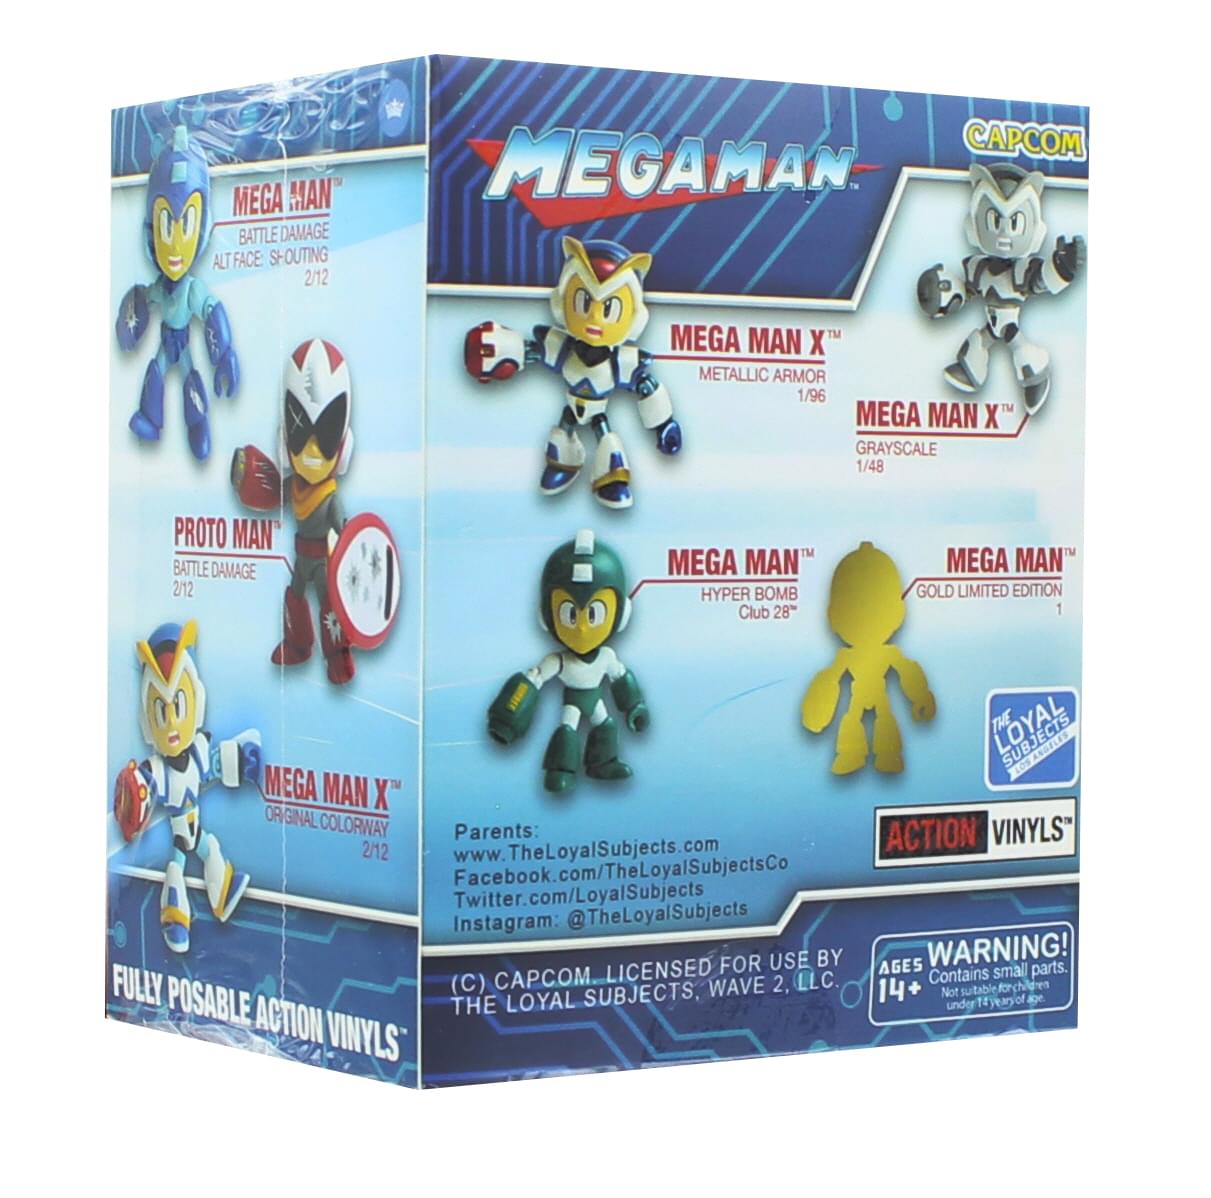 Mega Man Blind Box 3.25 Inch Battle Damaged Action Vinyl - One Random